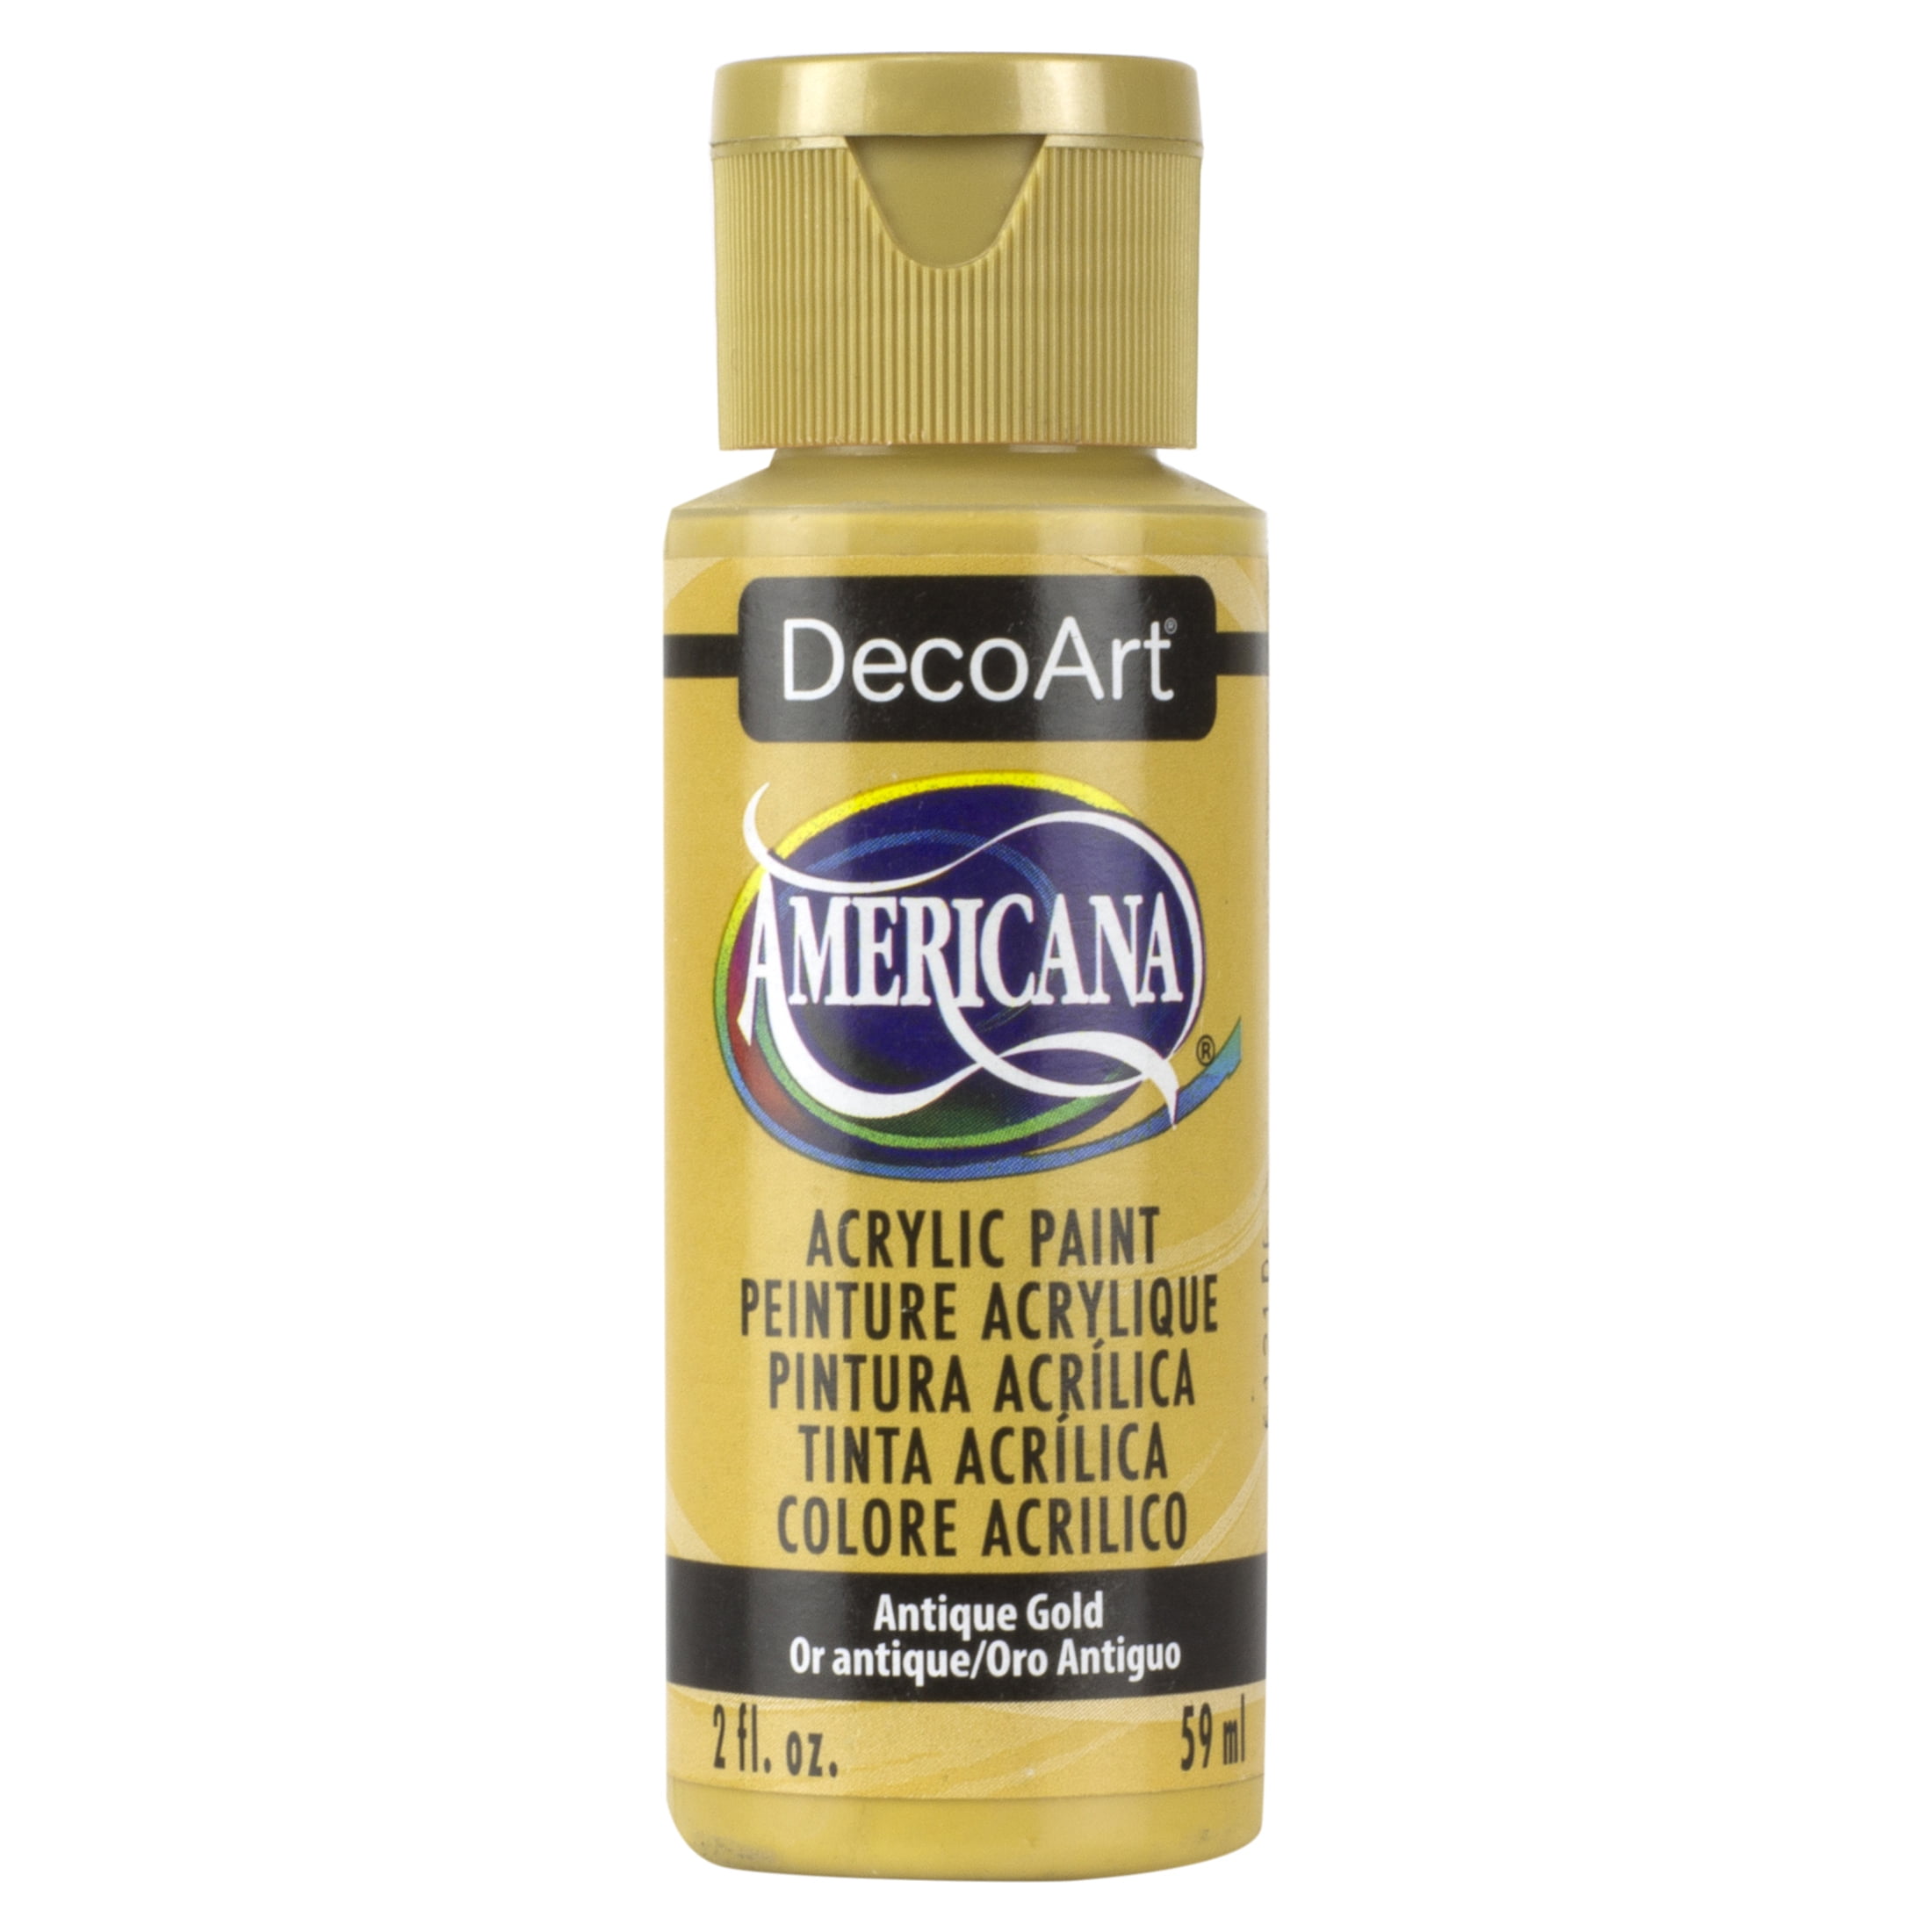 DecoArt Americana Acrylic Paint, 2 oz., Antique Gold 